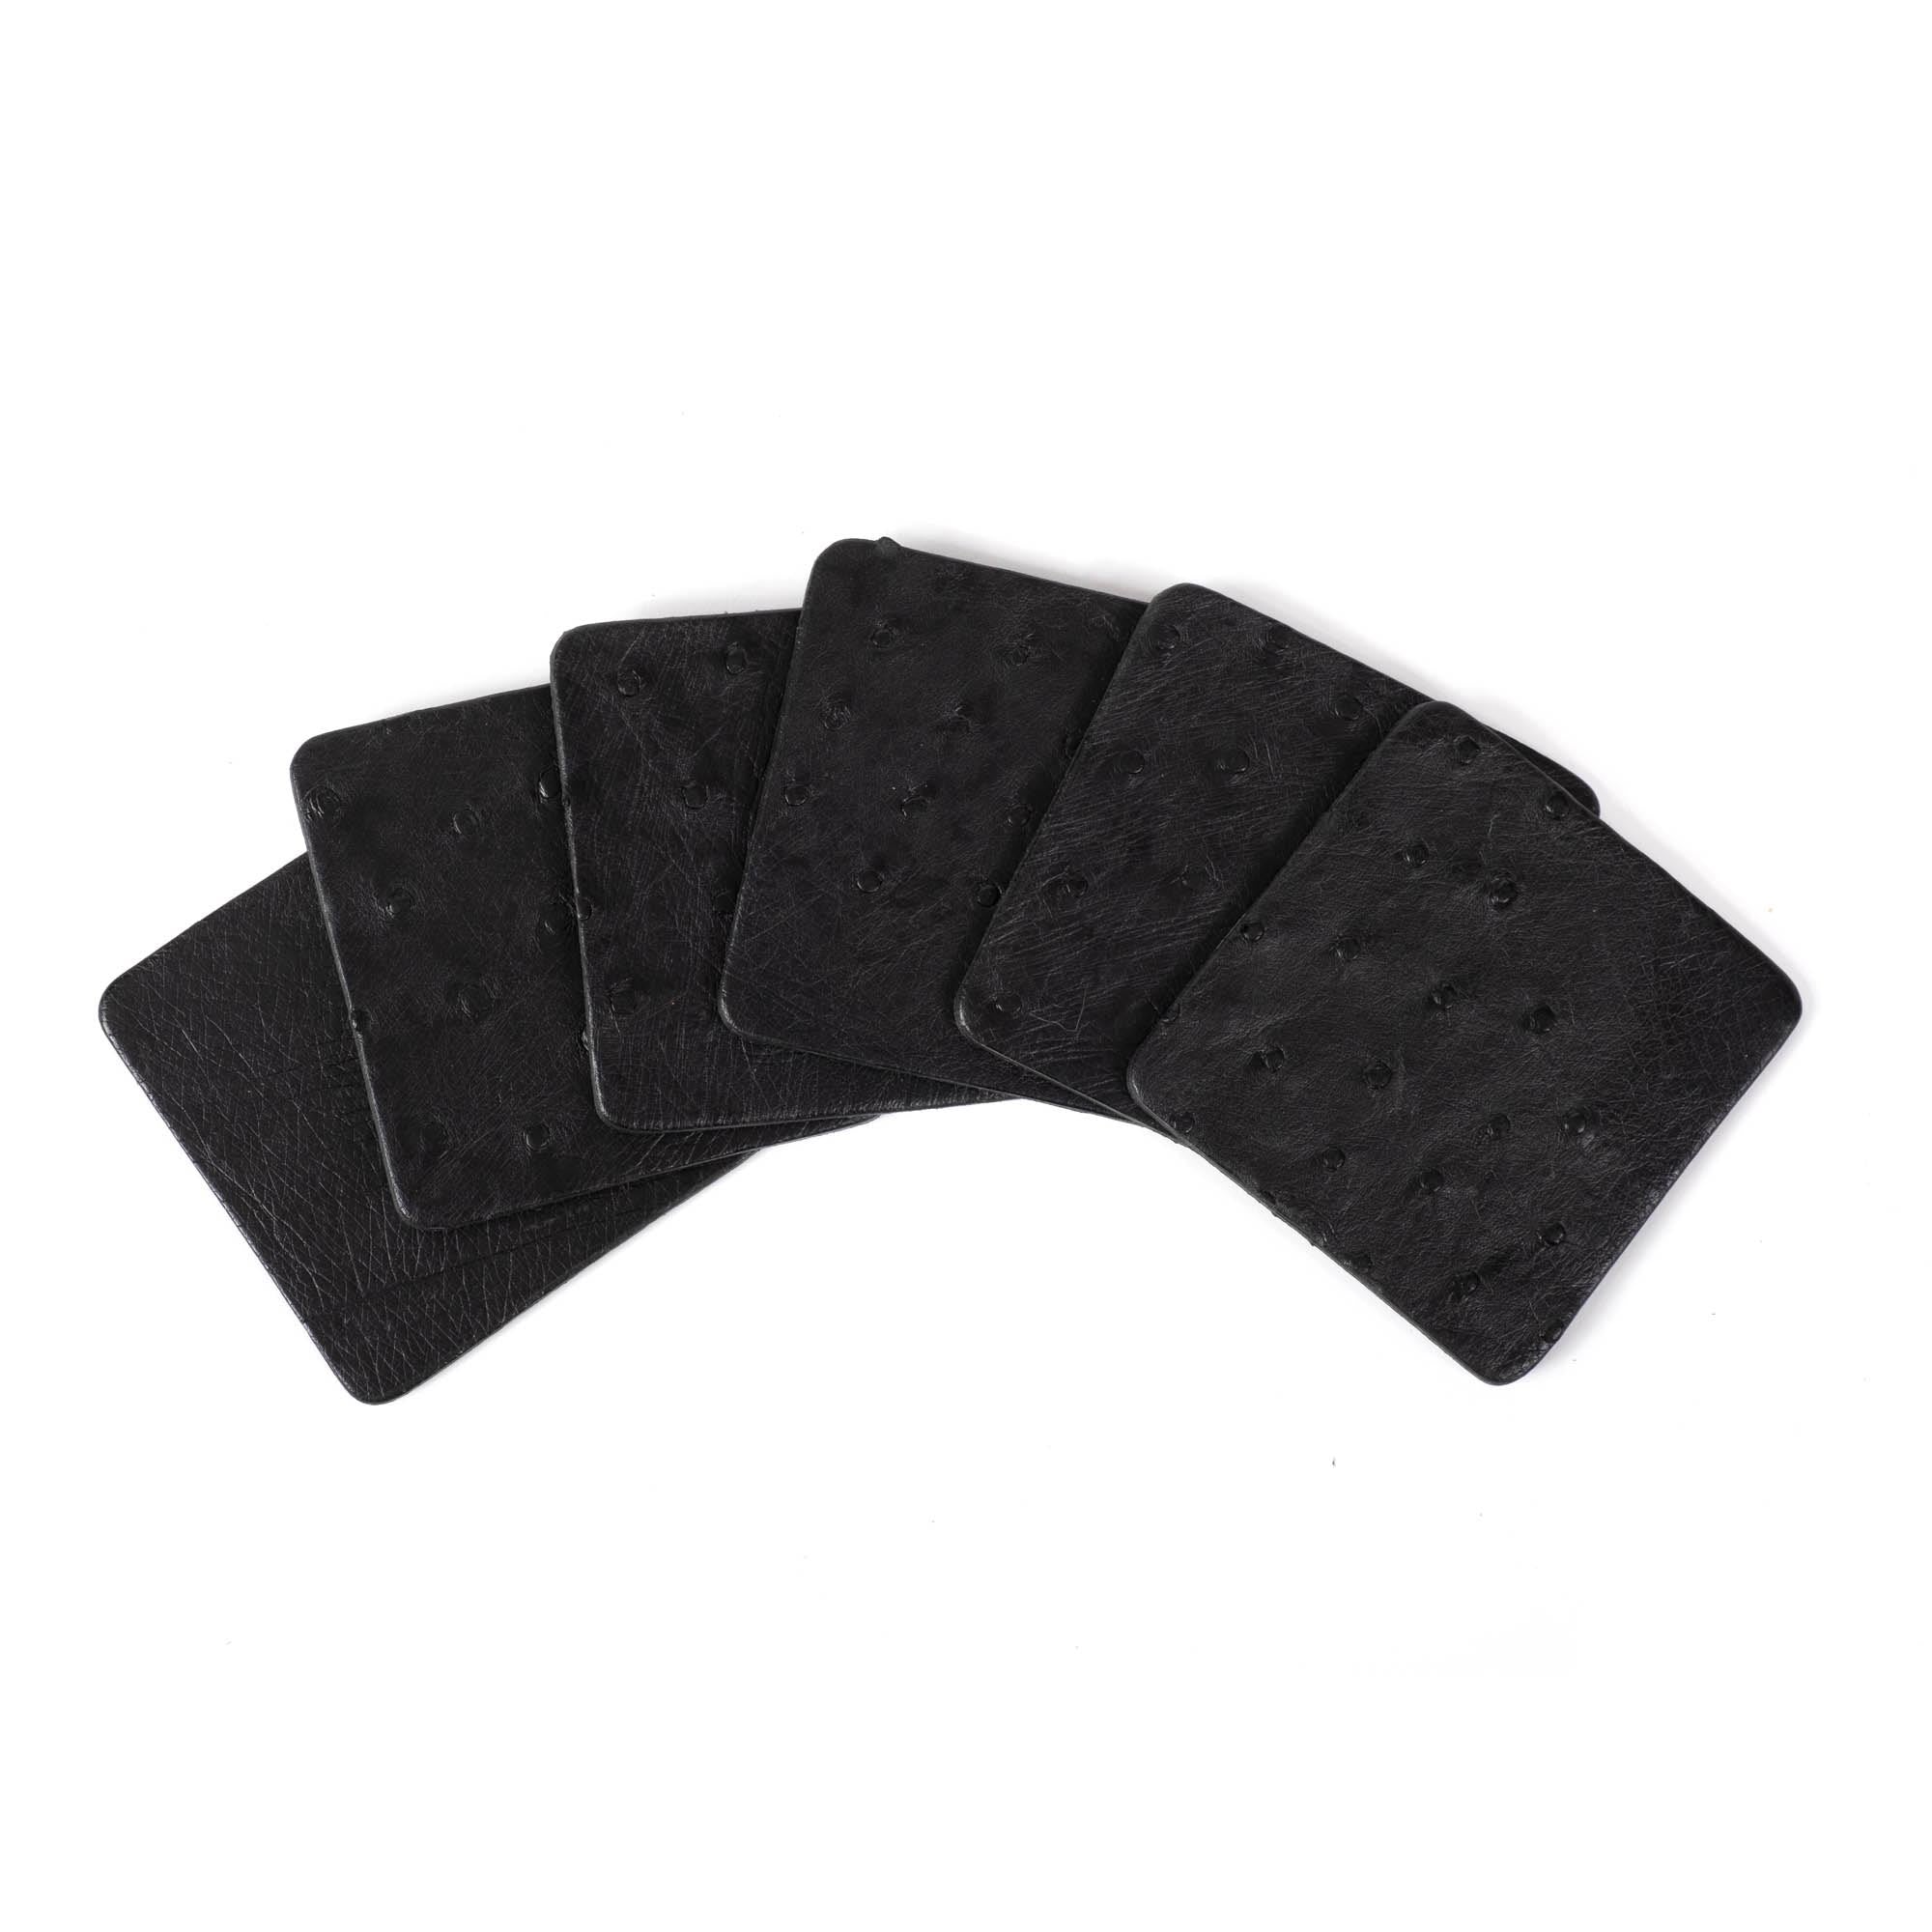 Ostrich Leather Coasters w/ Tie (S/6) - Black